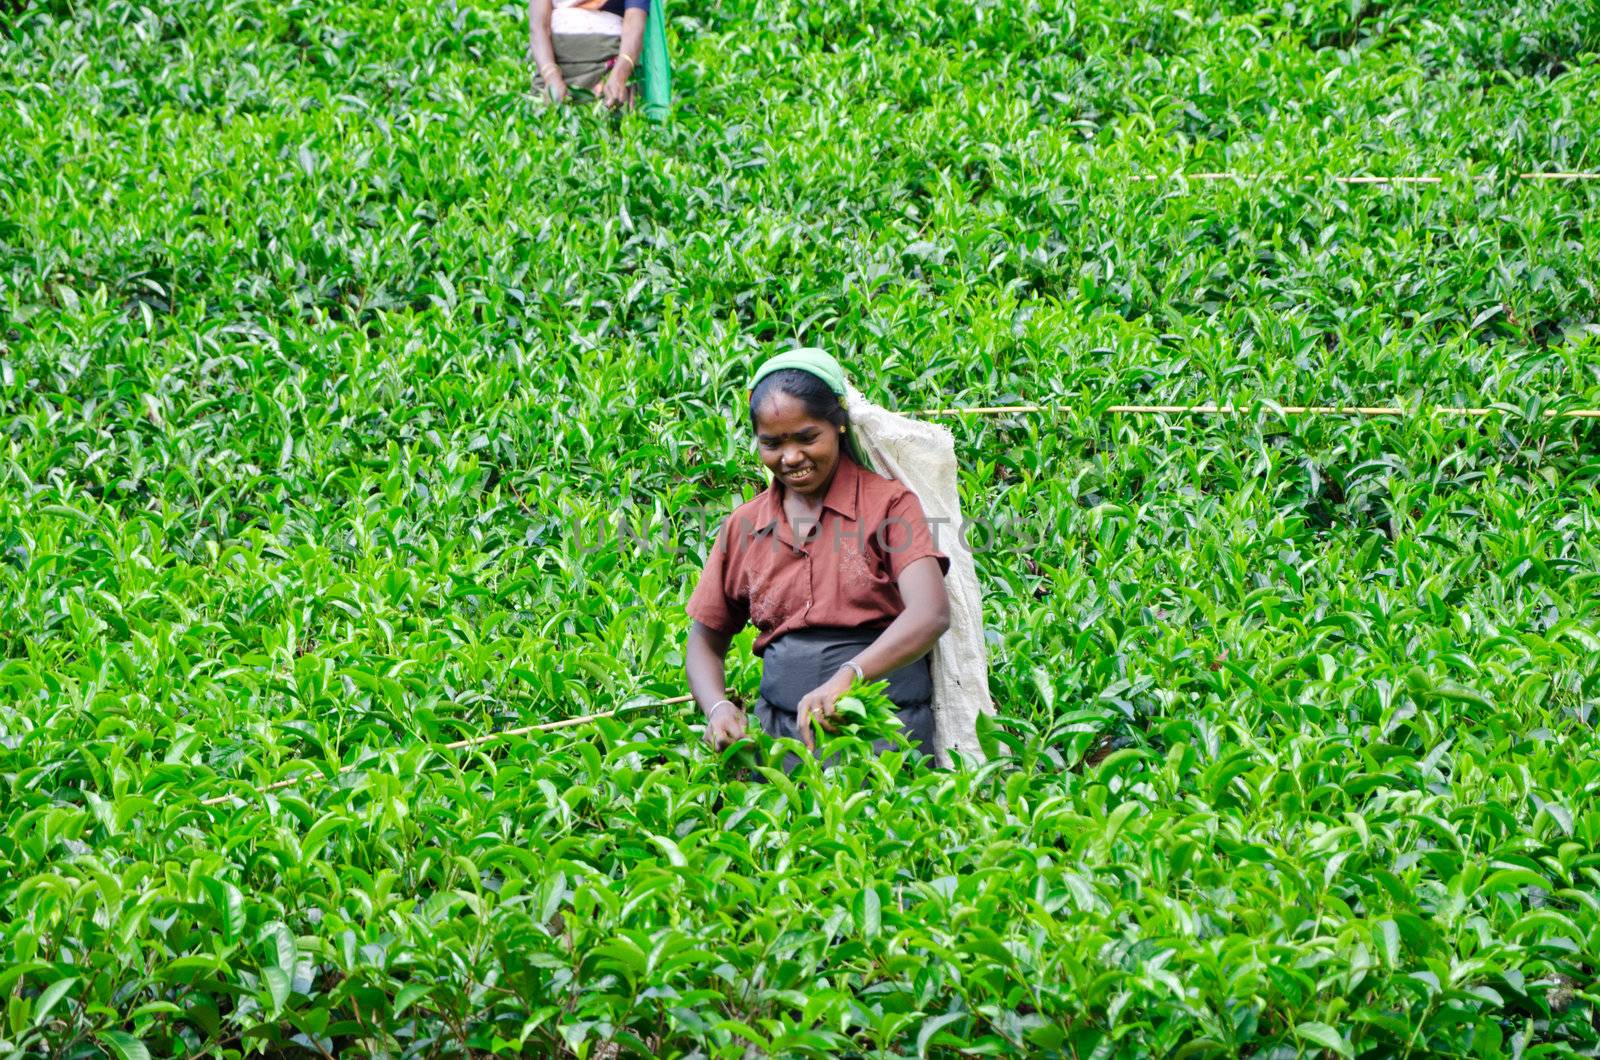 NEAR MOUNT PIDURUTALAGALA, SRI LANKA, DECEMBER 8, 2011. Tea pickers working on tea plantations near Mount Pidurutalagala, Sri Lanka, December 8, 2011.